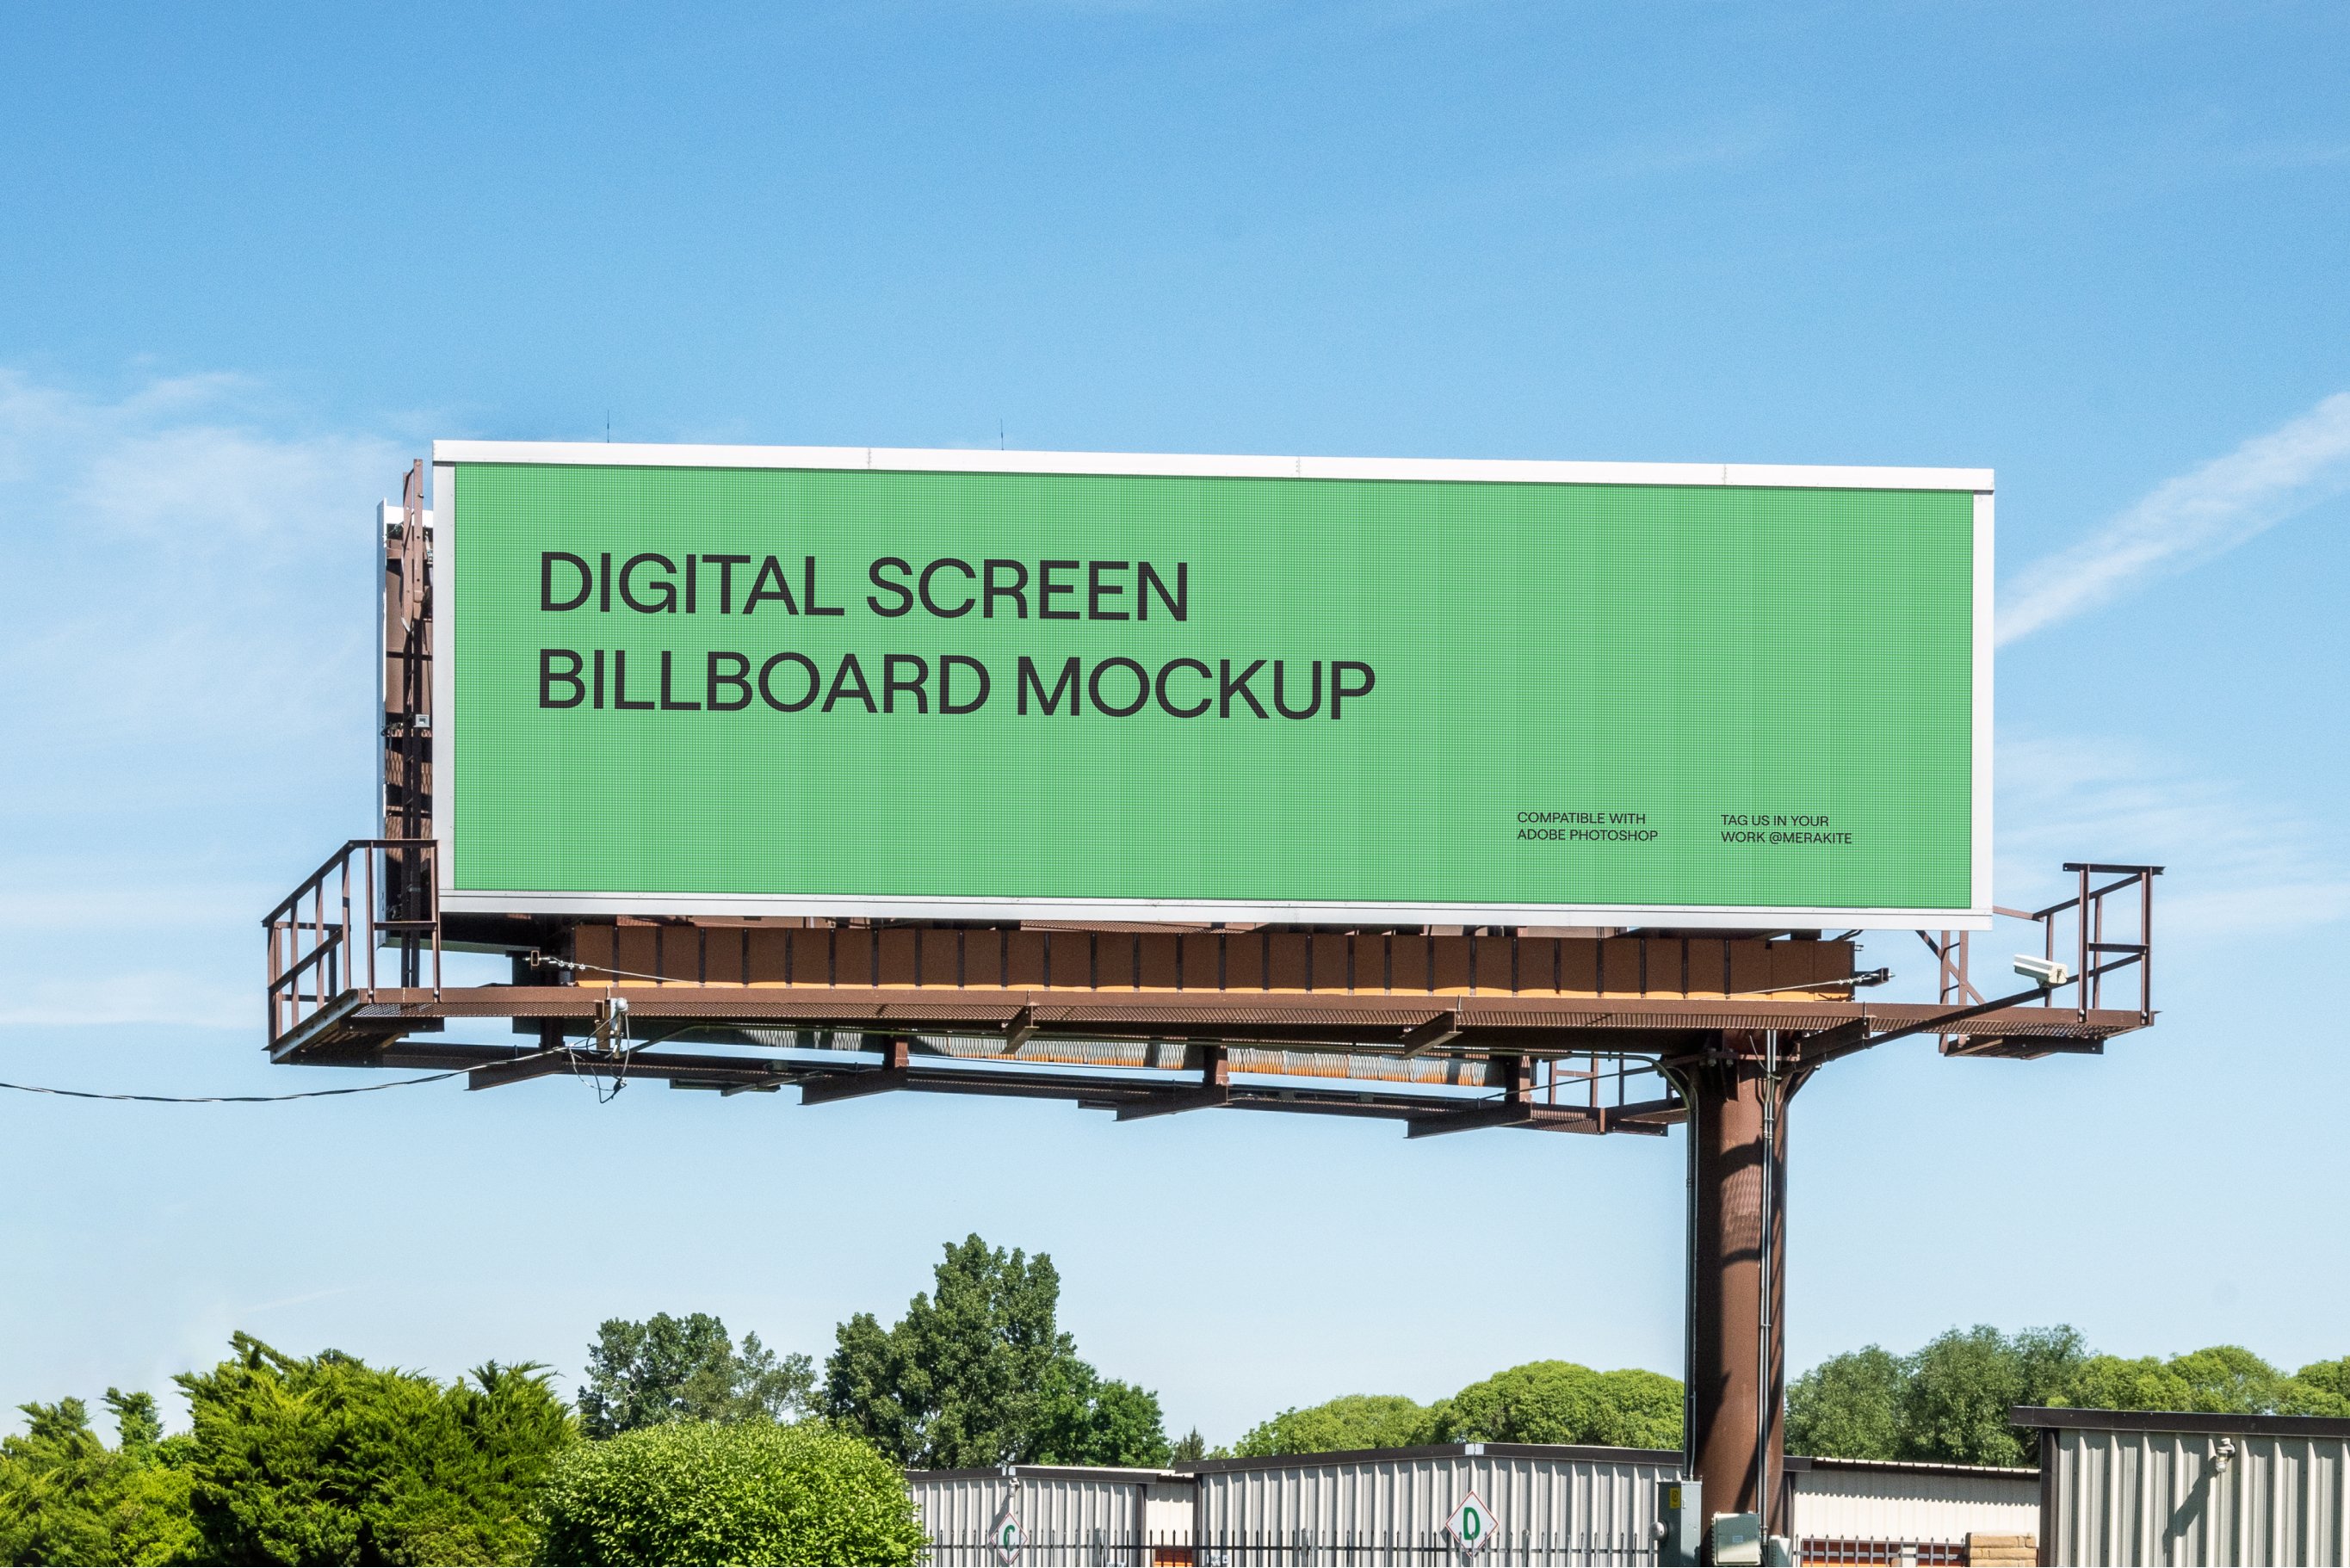 Digital Billboard Mockup PSD cover image.